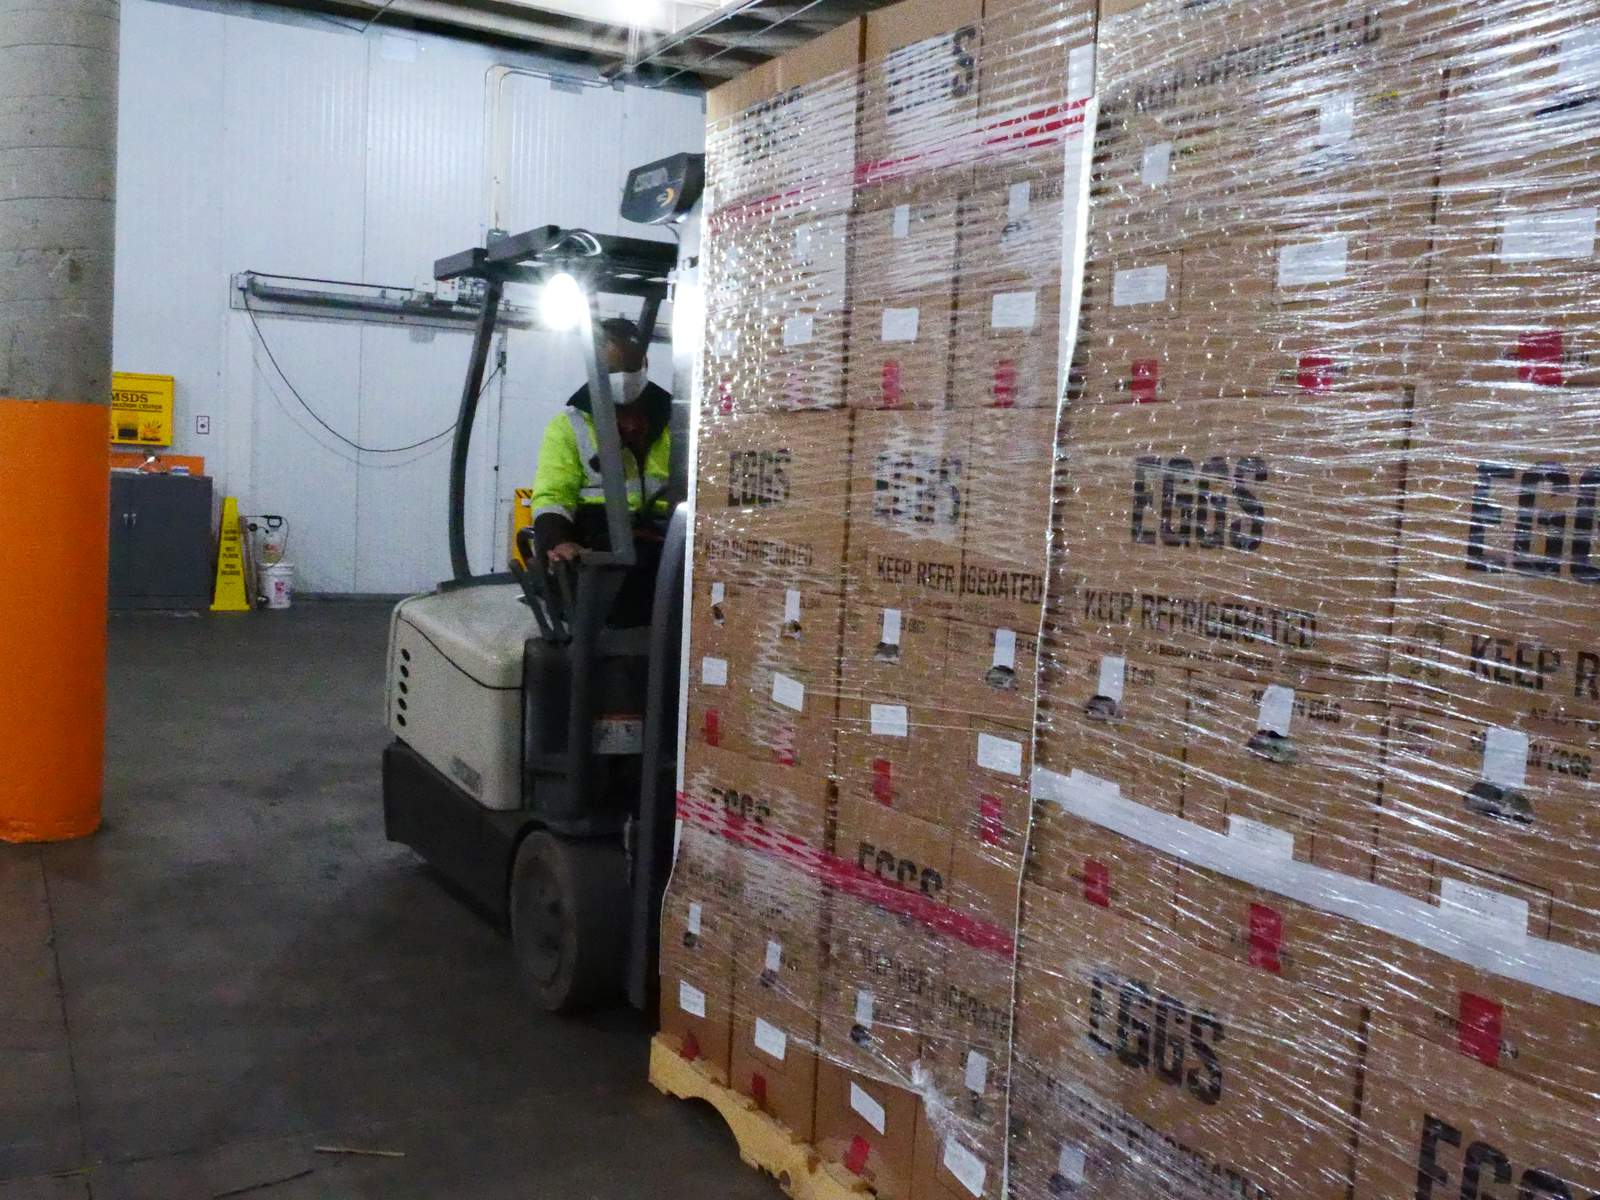 Cowford Chophouse, Cal-Maine Foods donate 1.2M eggs to Feeding Northeast Florida